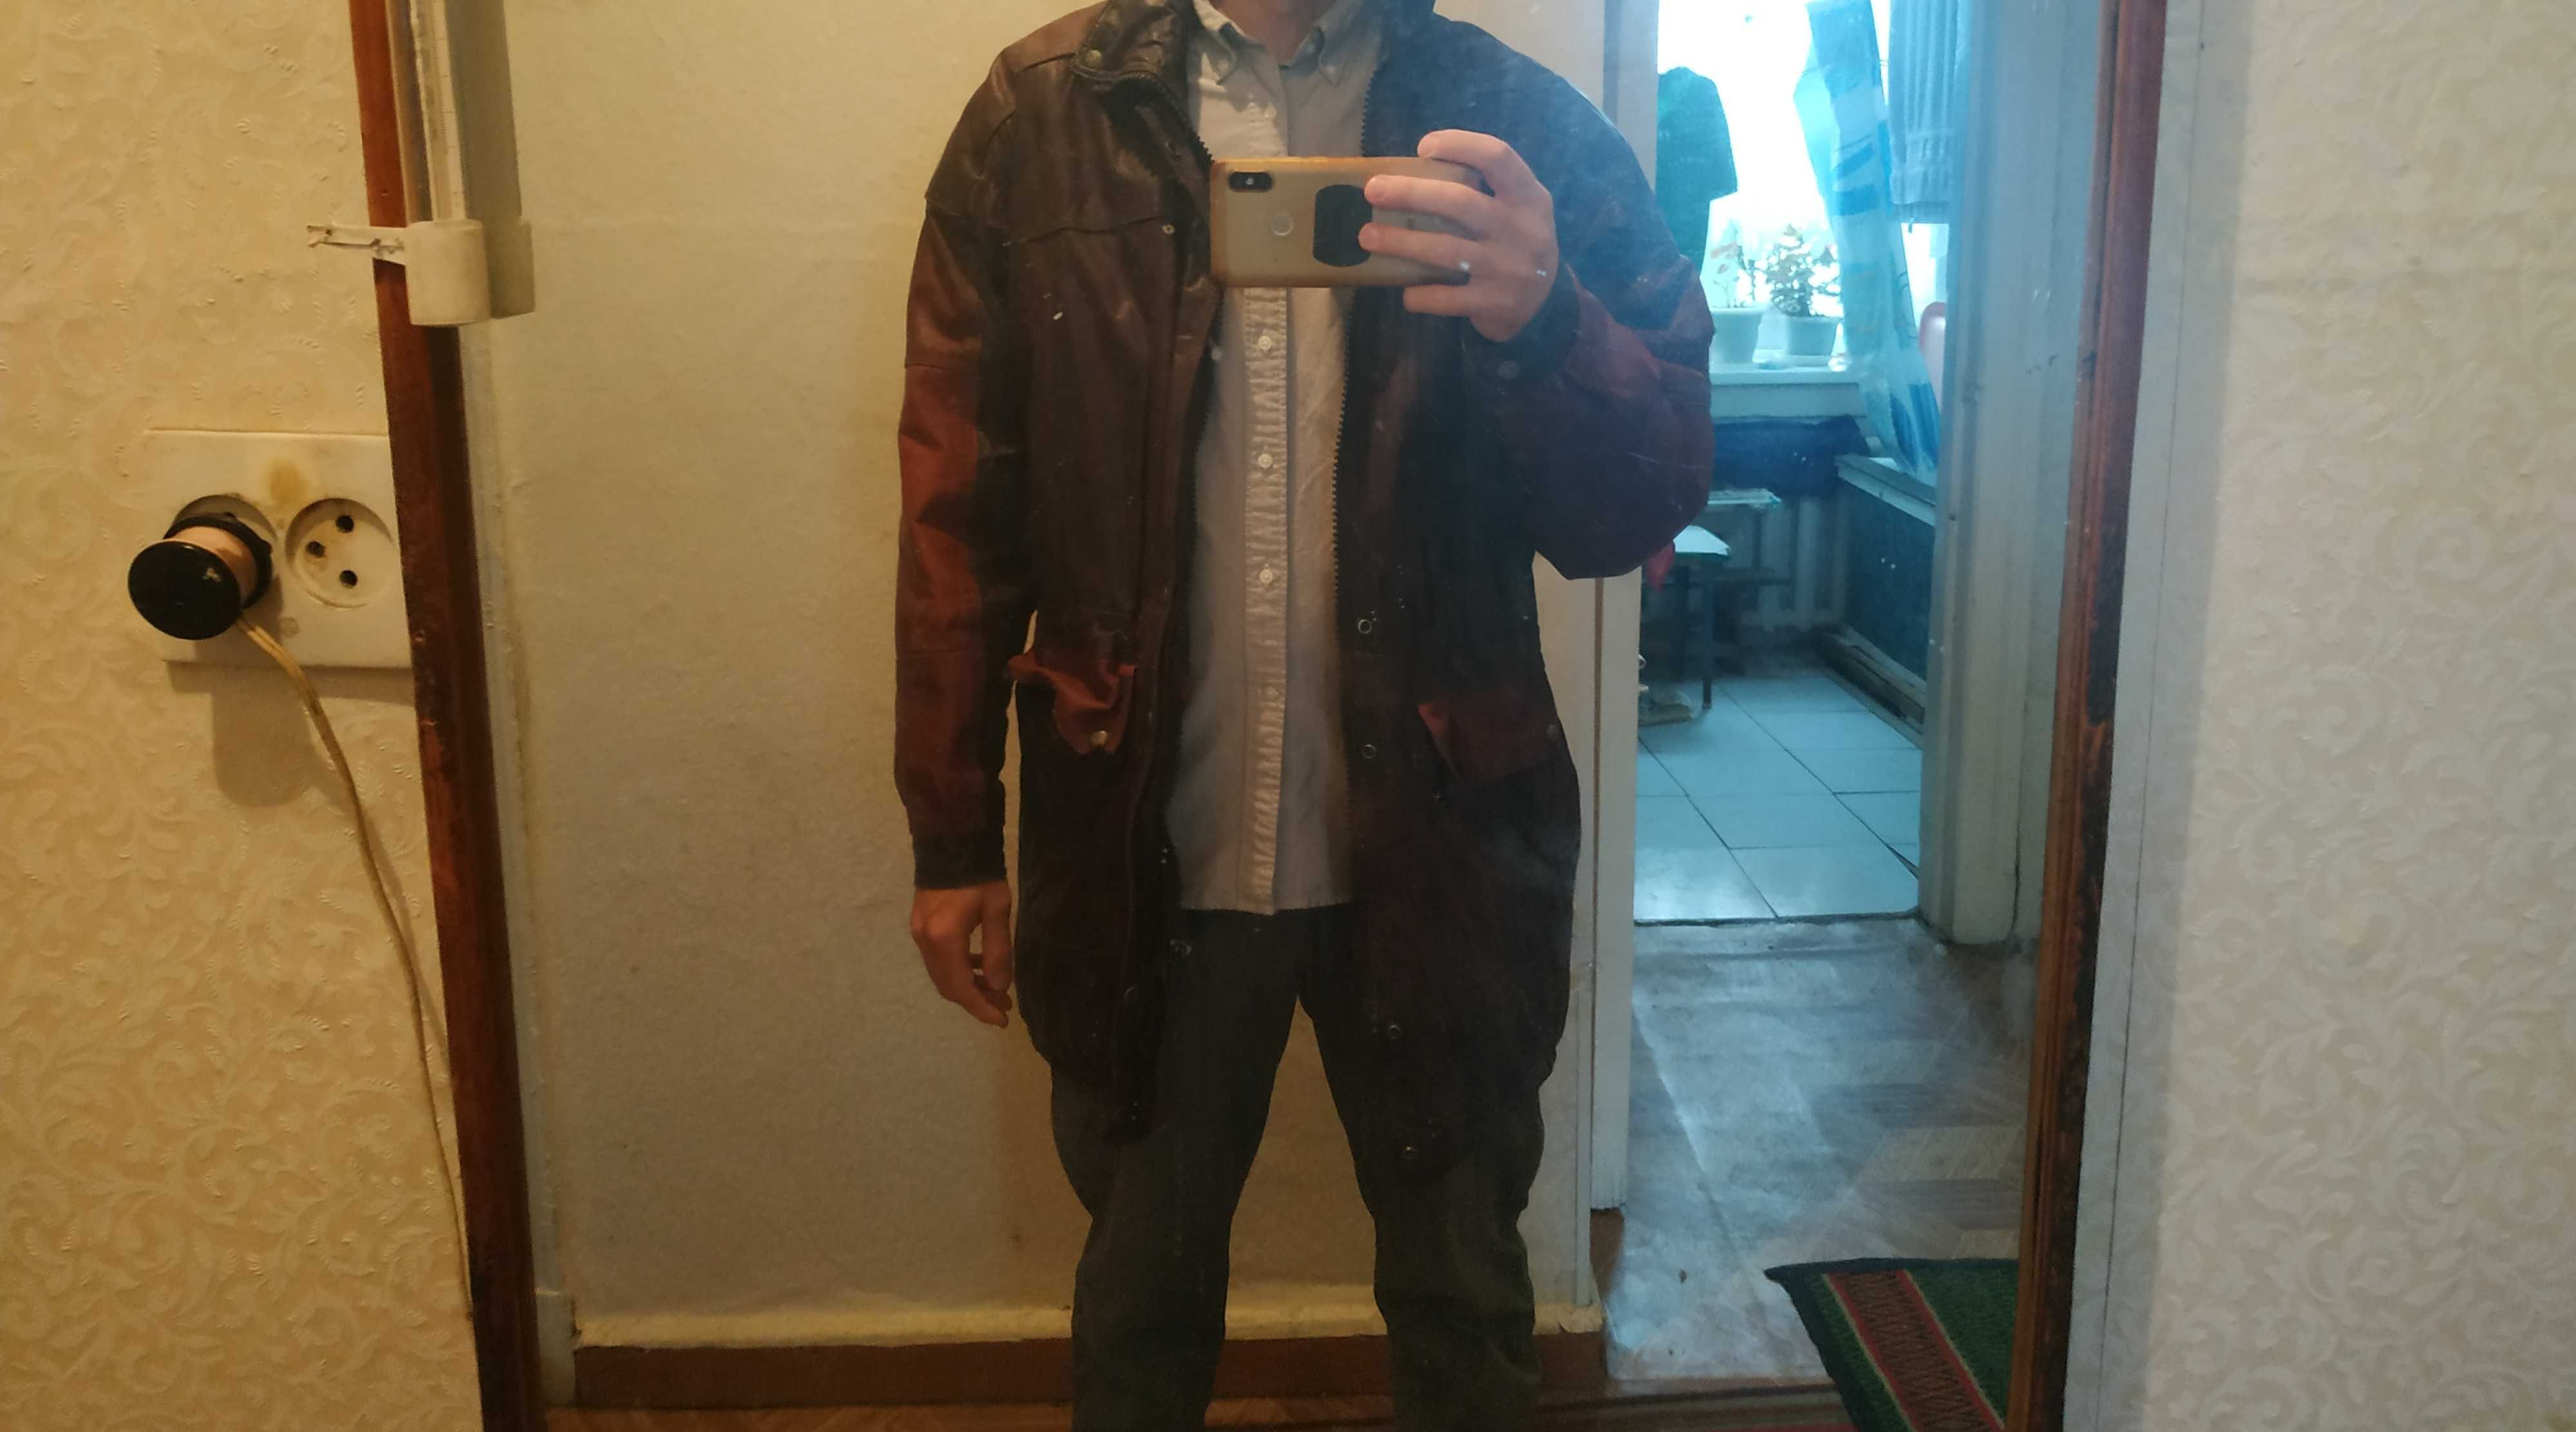 Кожаная куртка 90-х